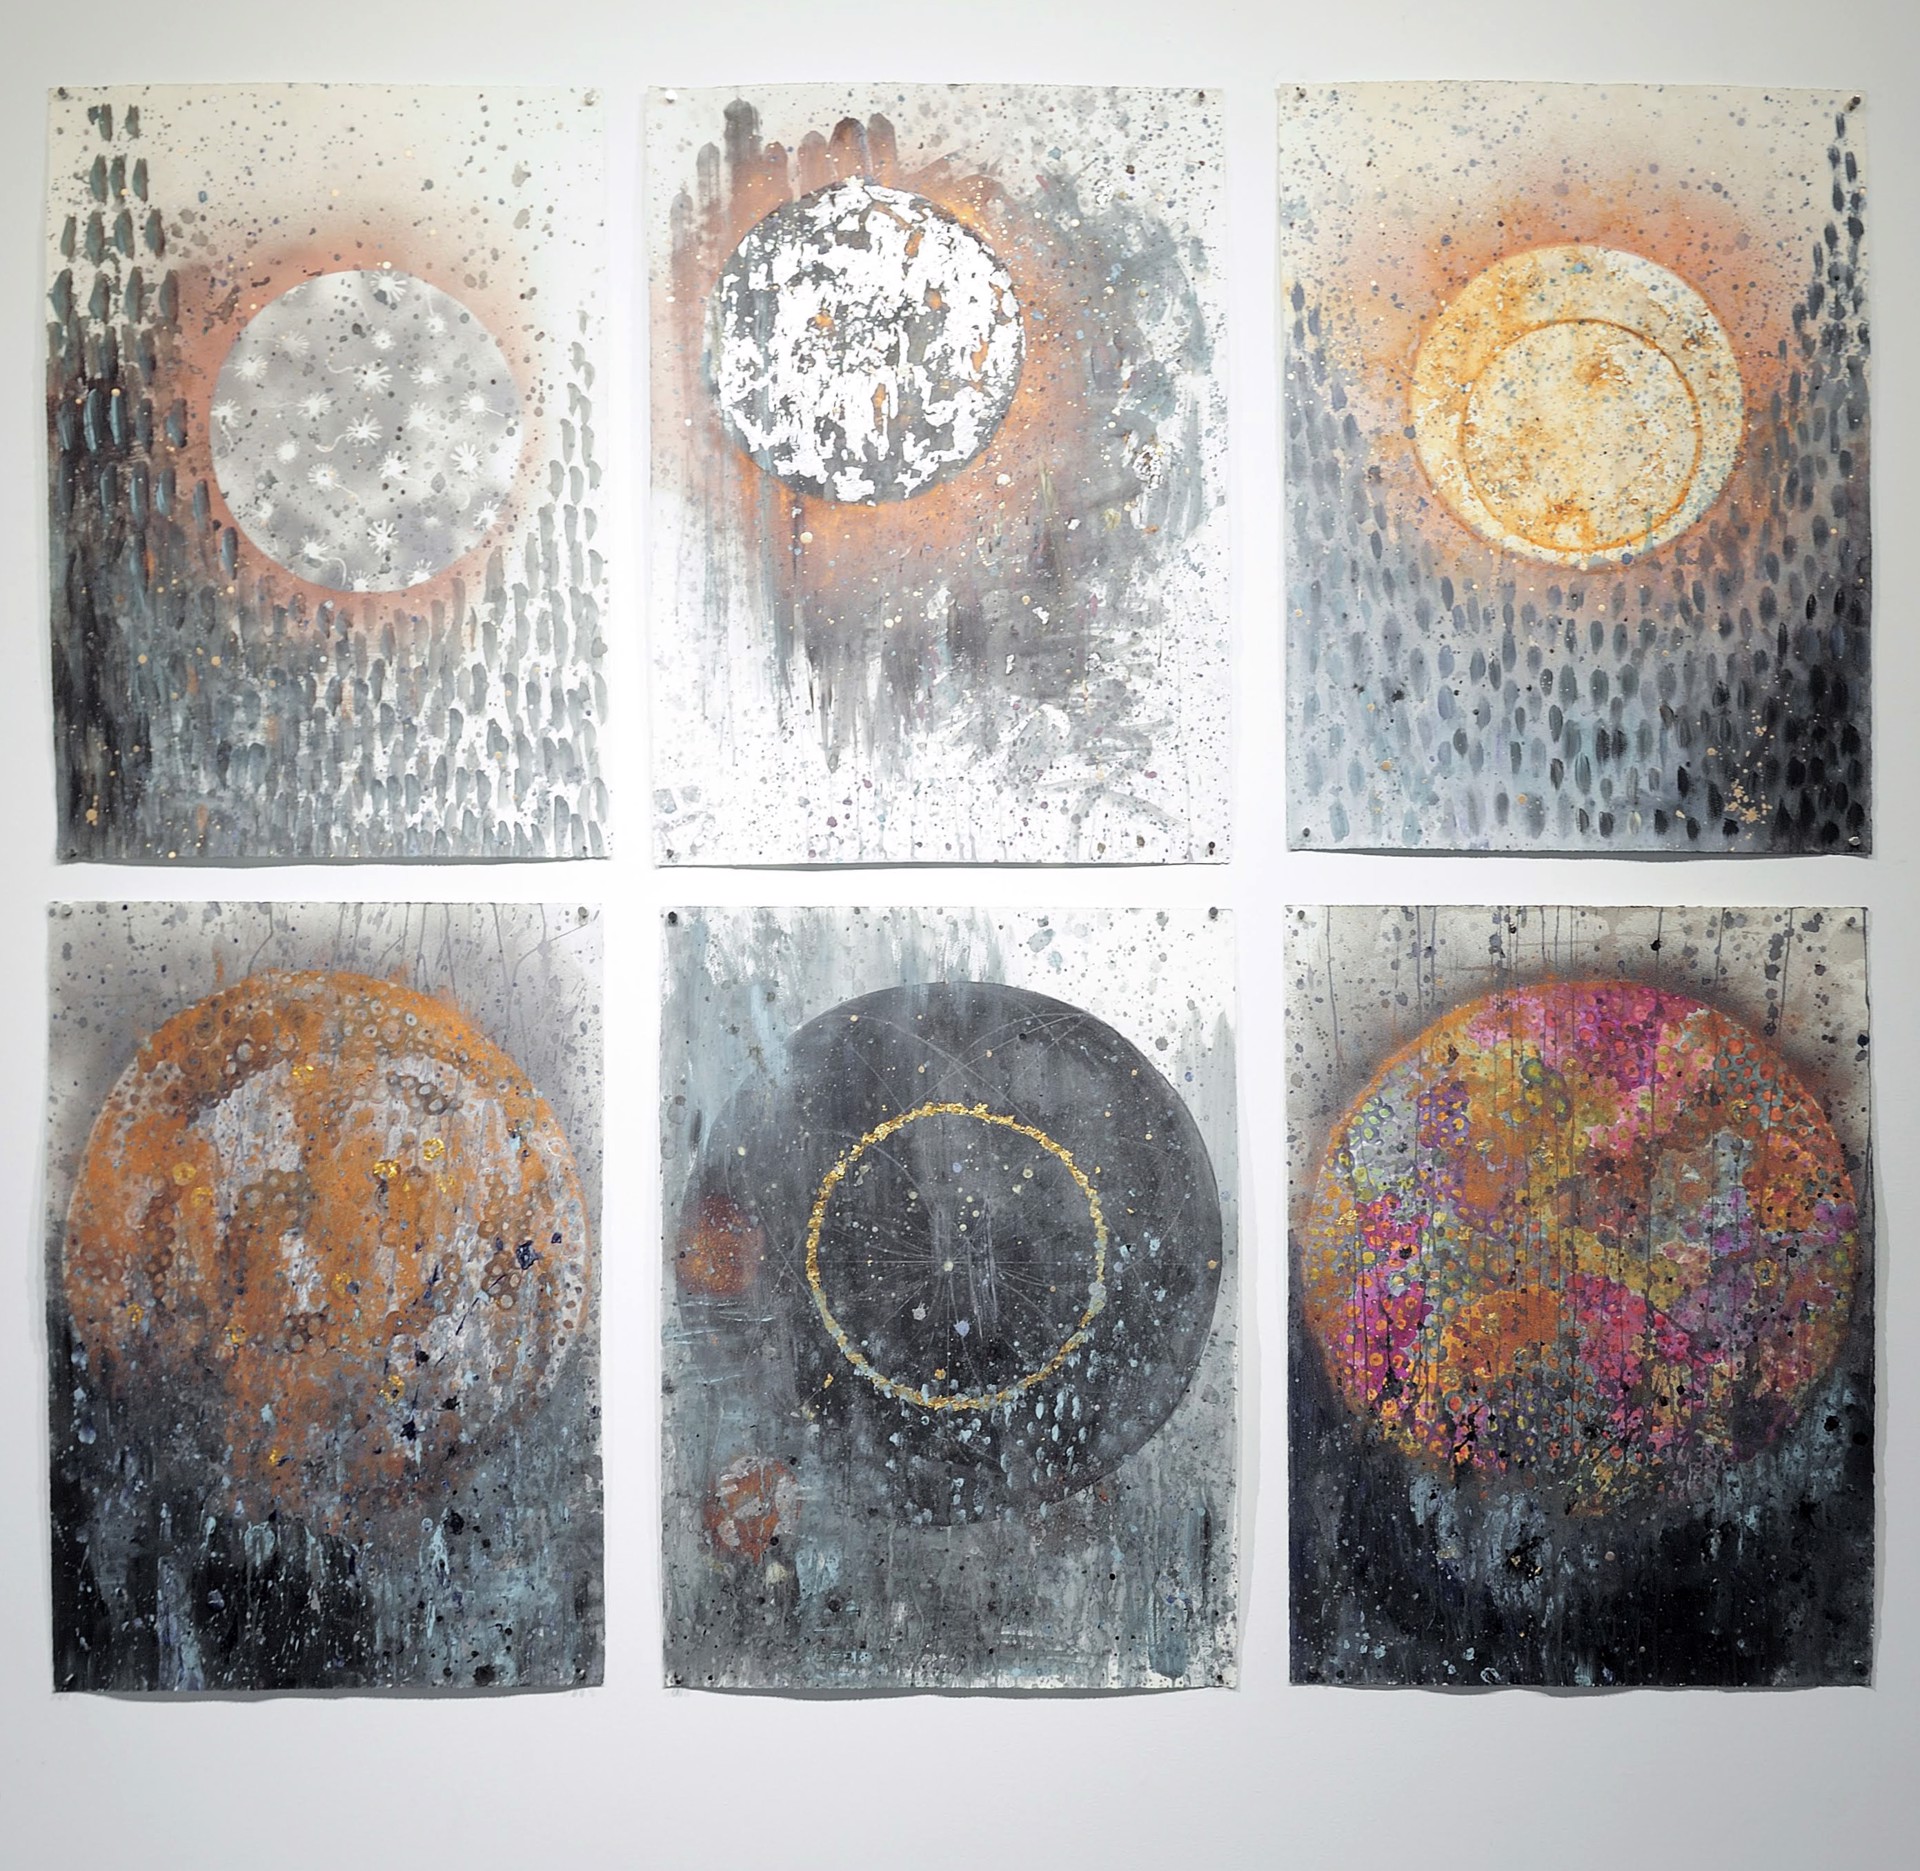 Lunar Studies in Time IV by Corrina Sephora